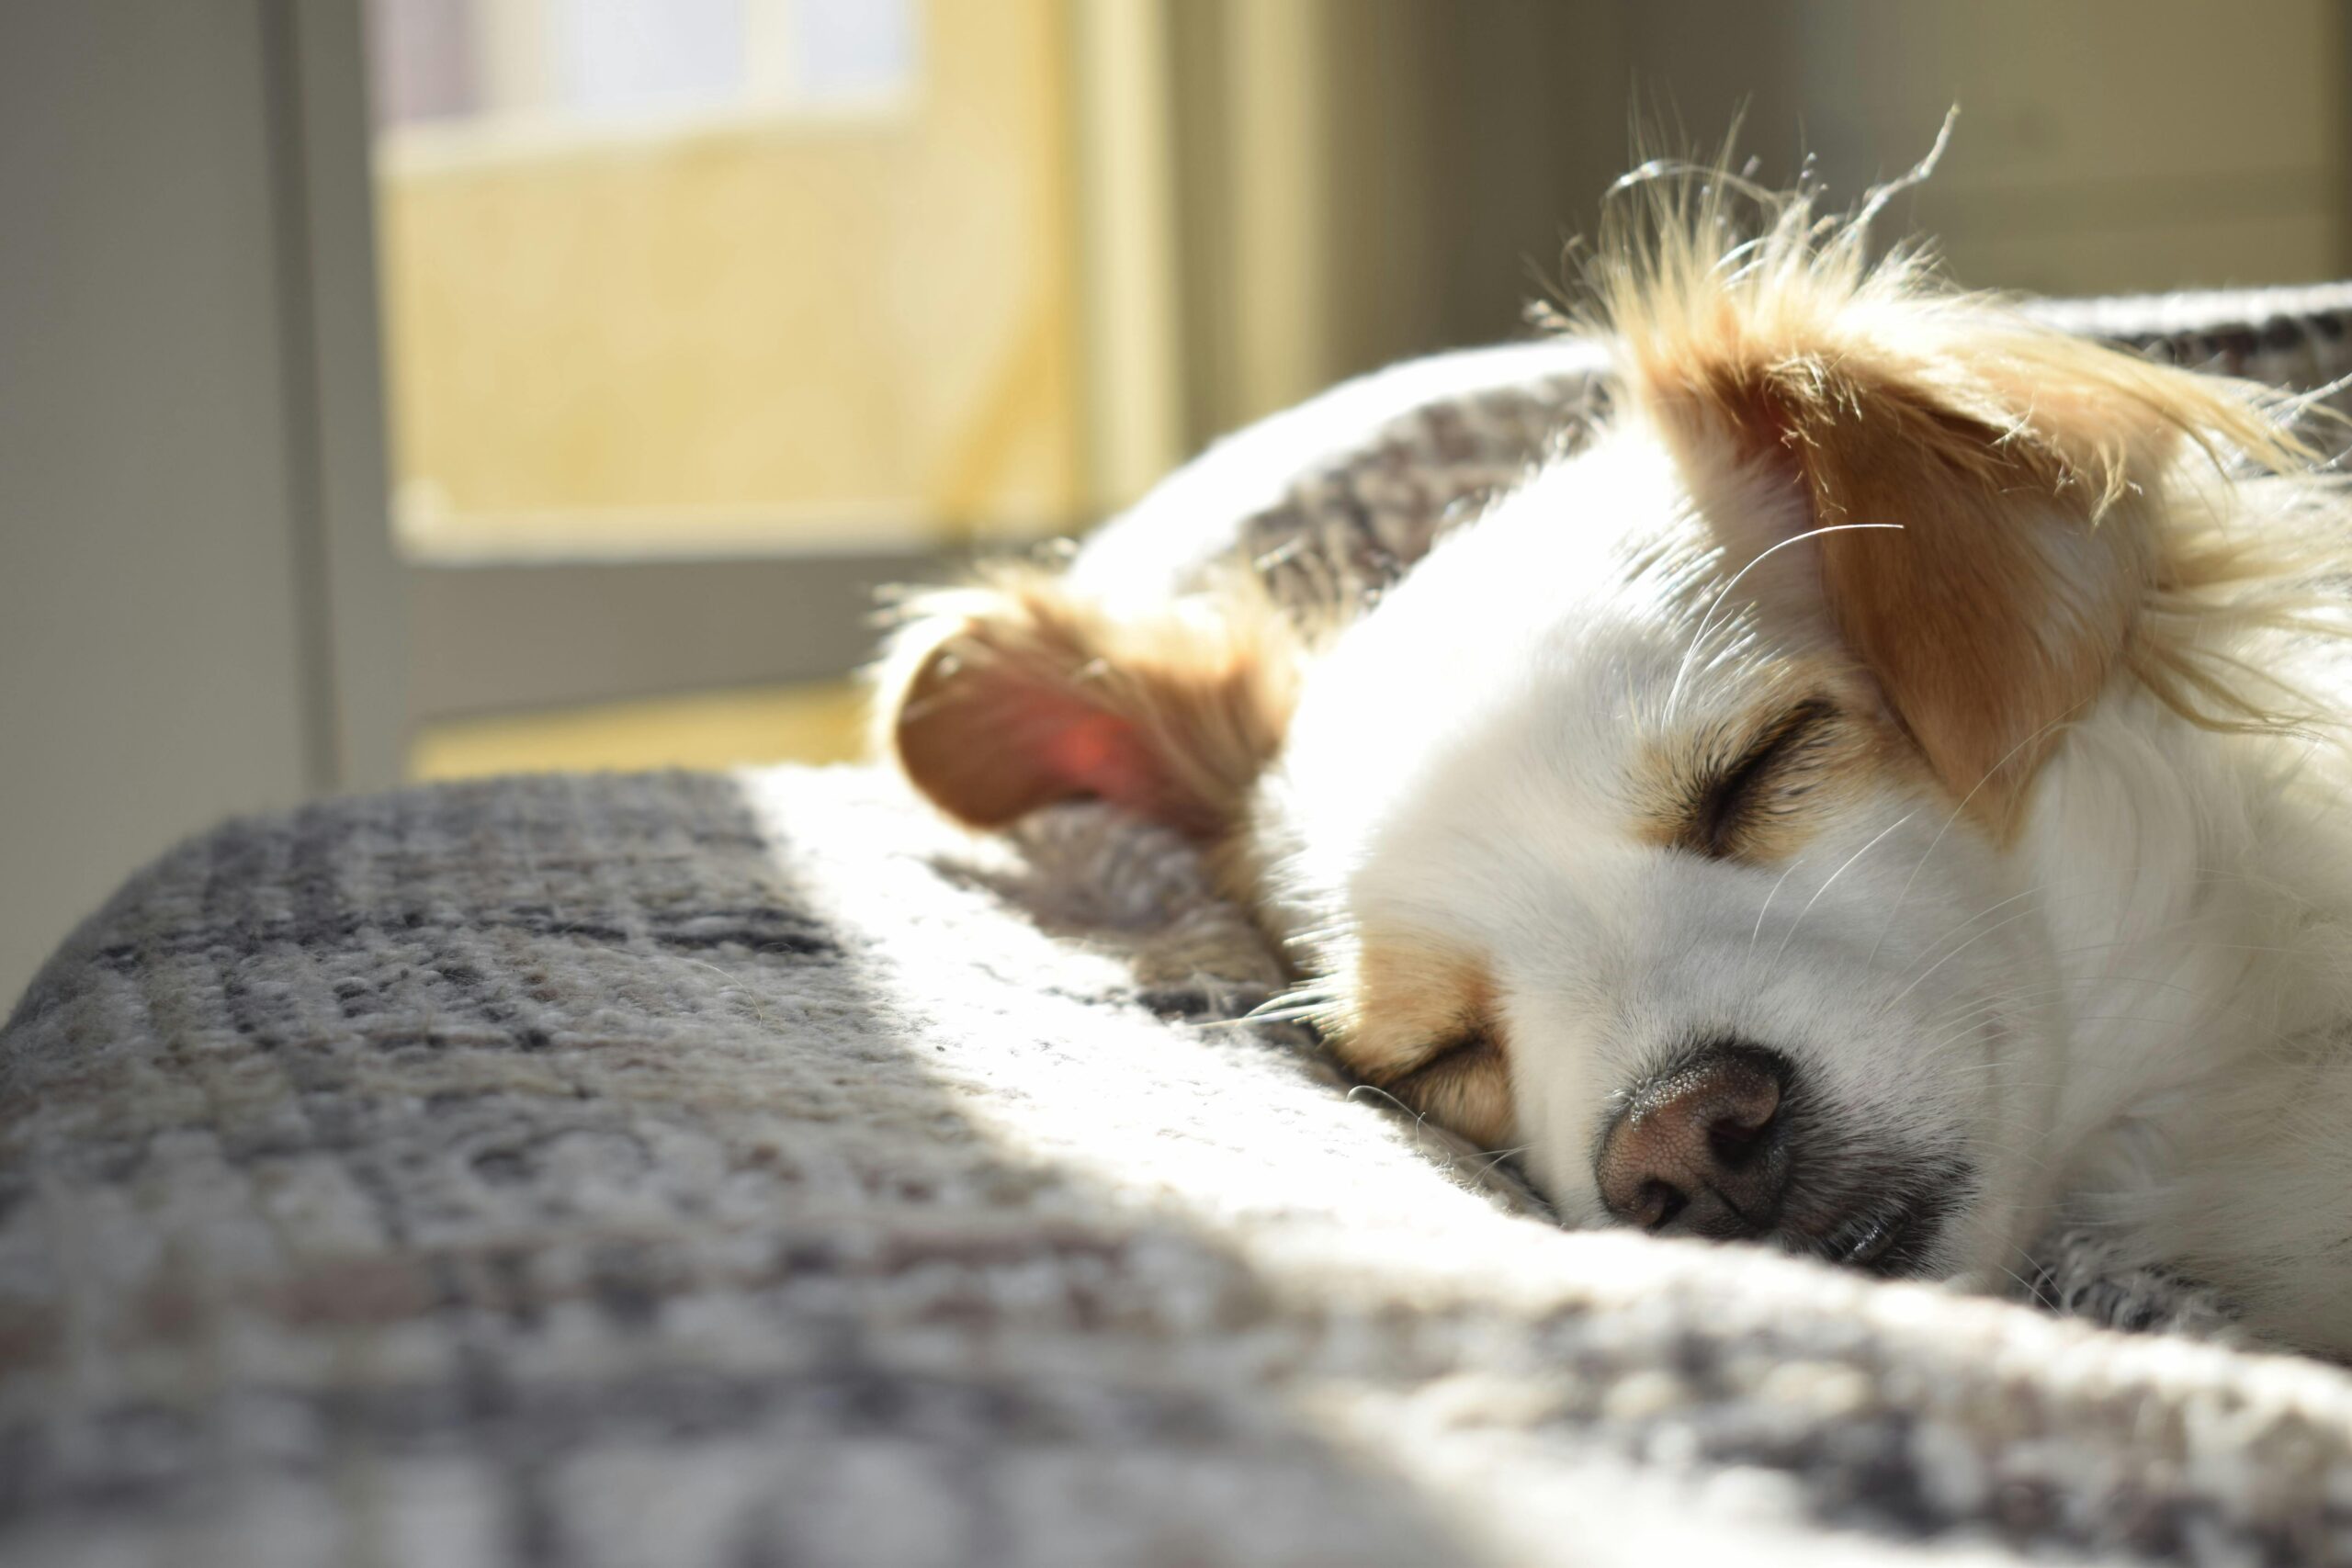 A white and tan dog sleep on a gray cushion